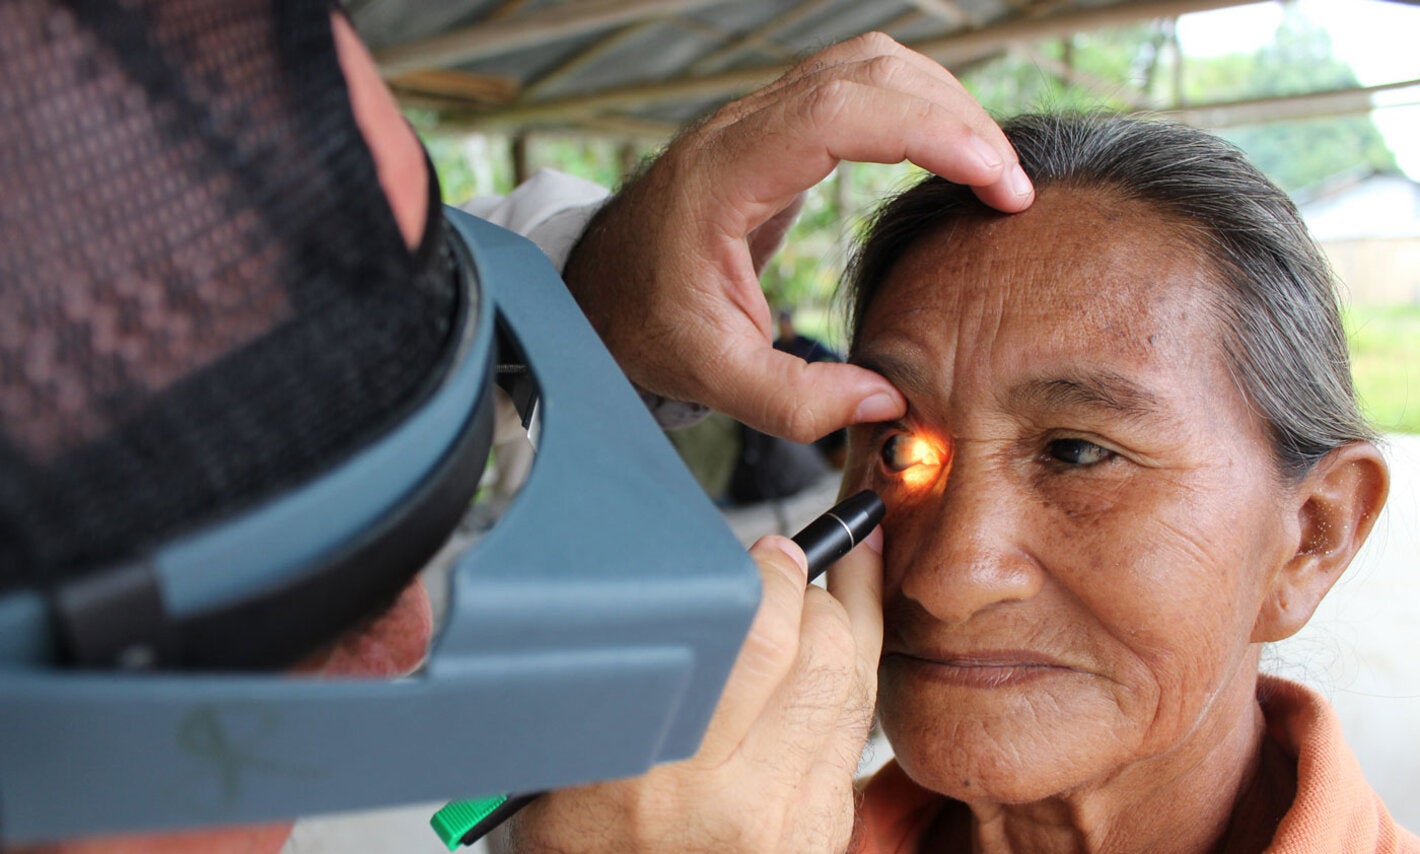 Woman is examined  - trachoma